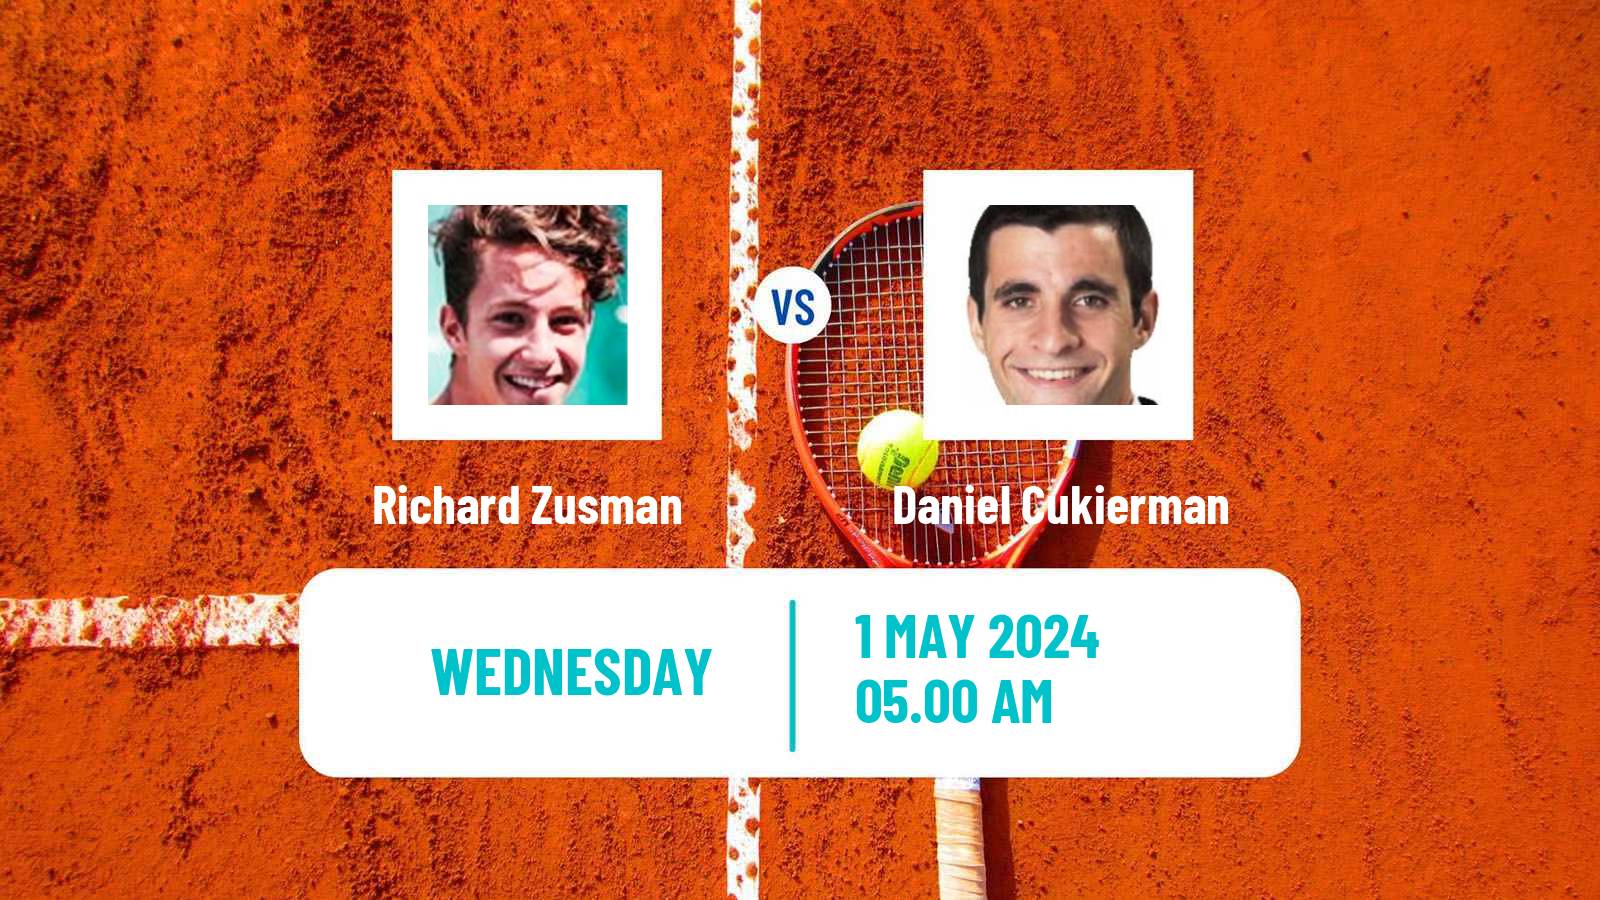 Tennis ITF M25 Sabadell Men Richard Zusman - Daniel Cukierman